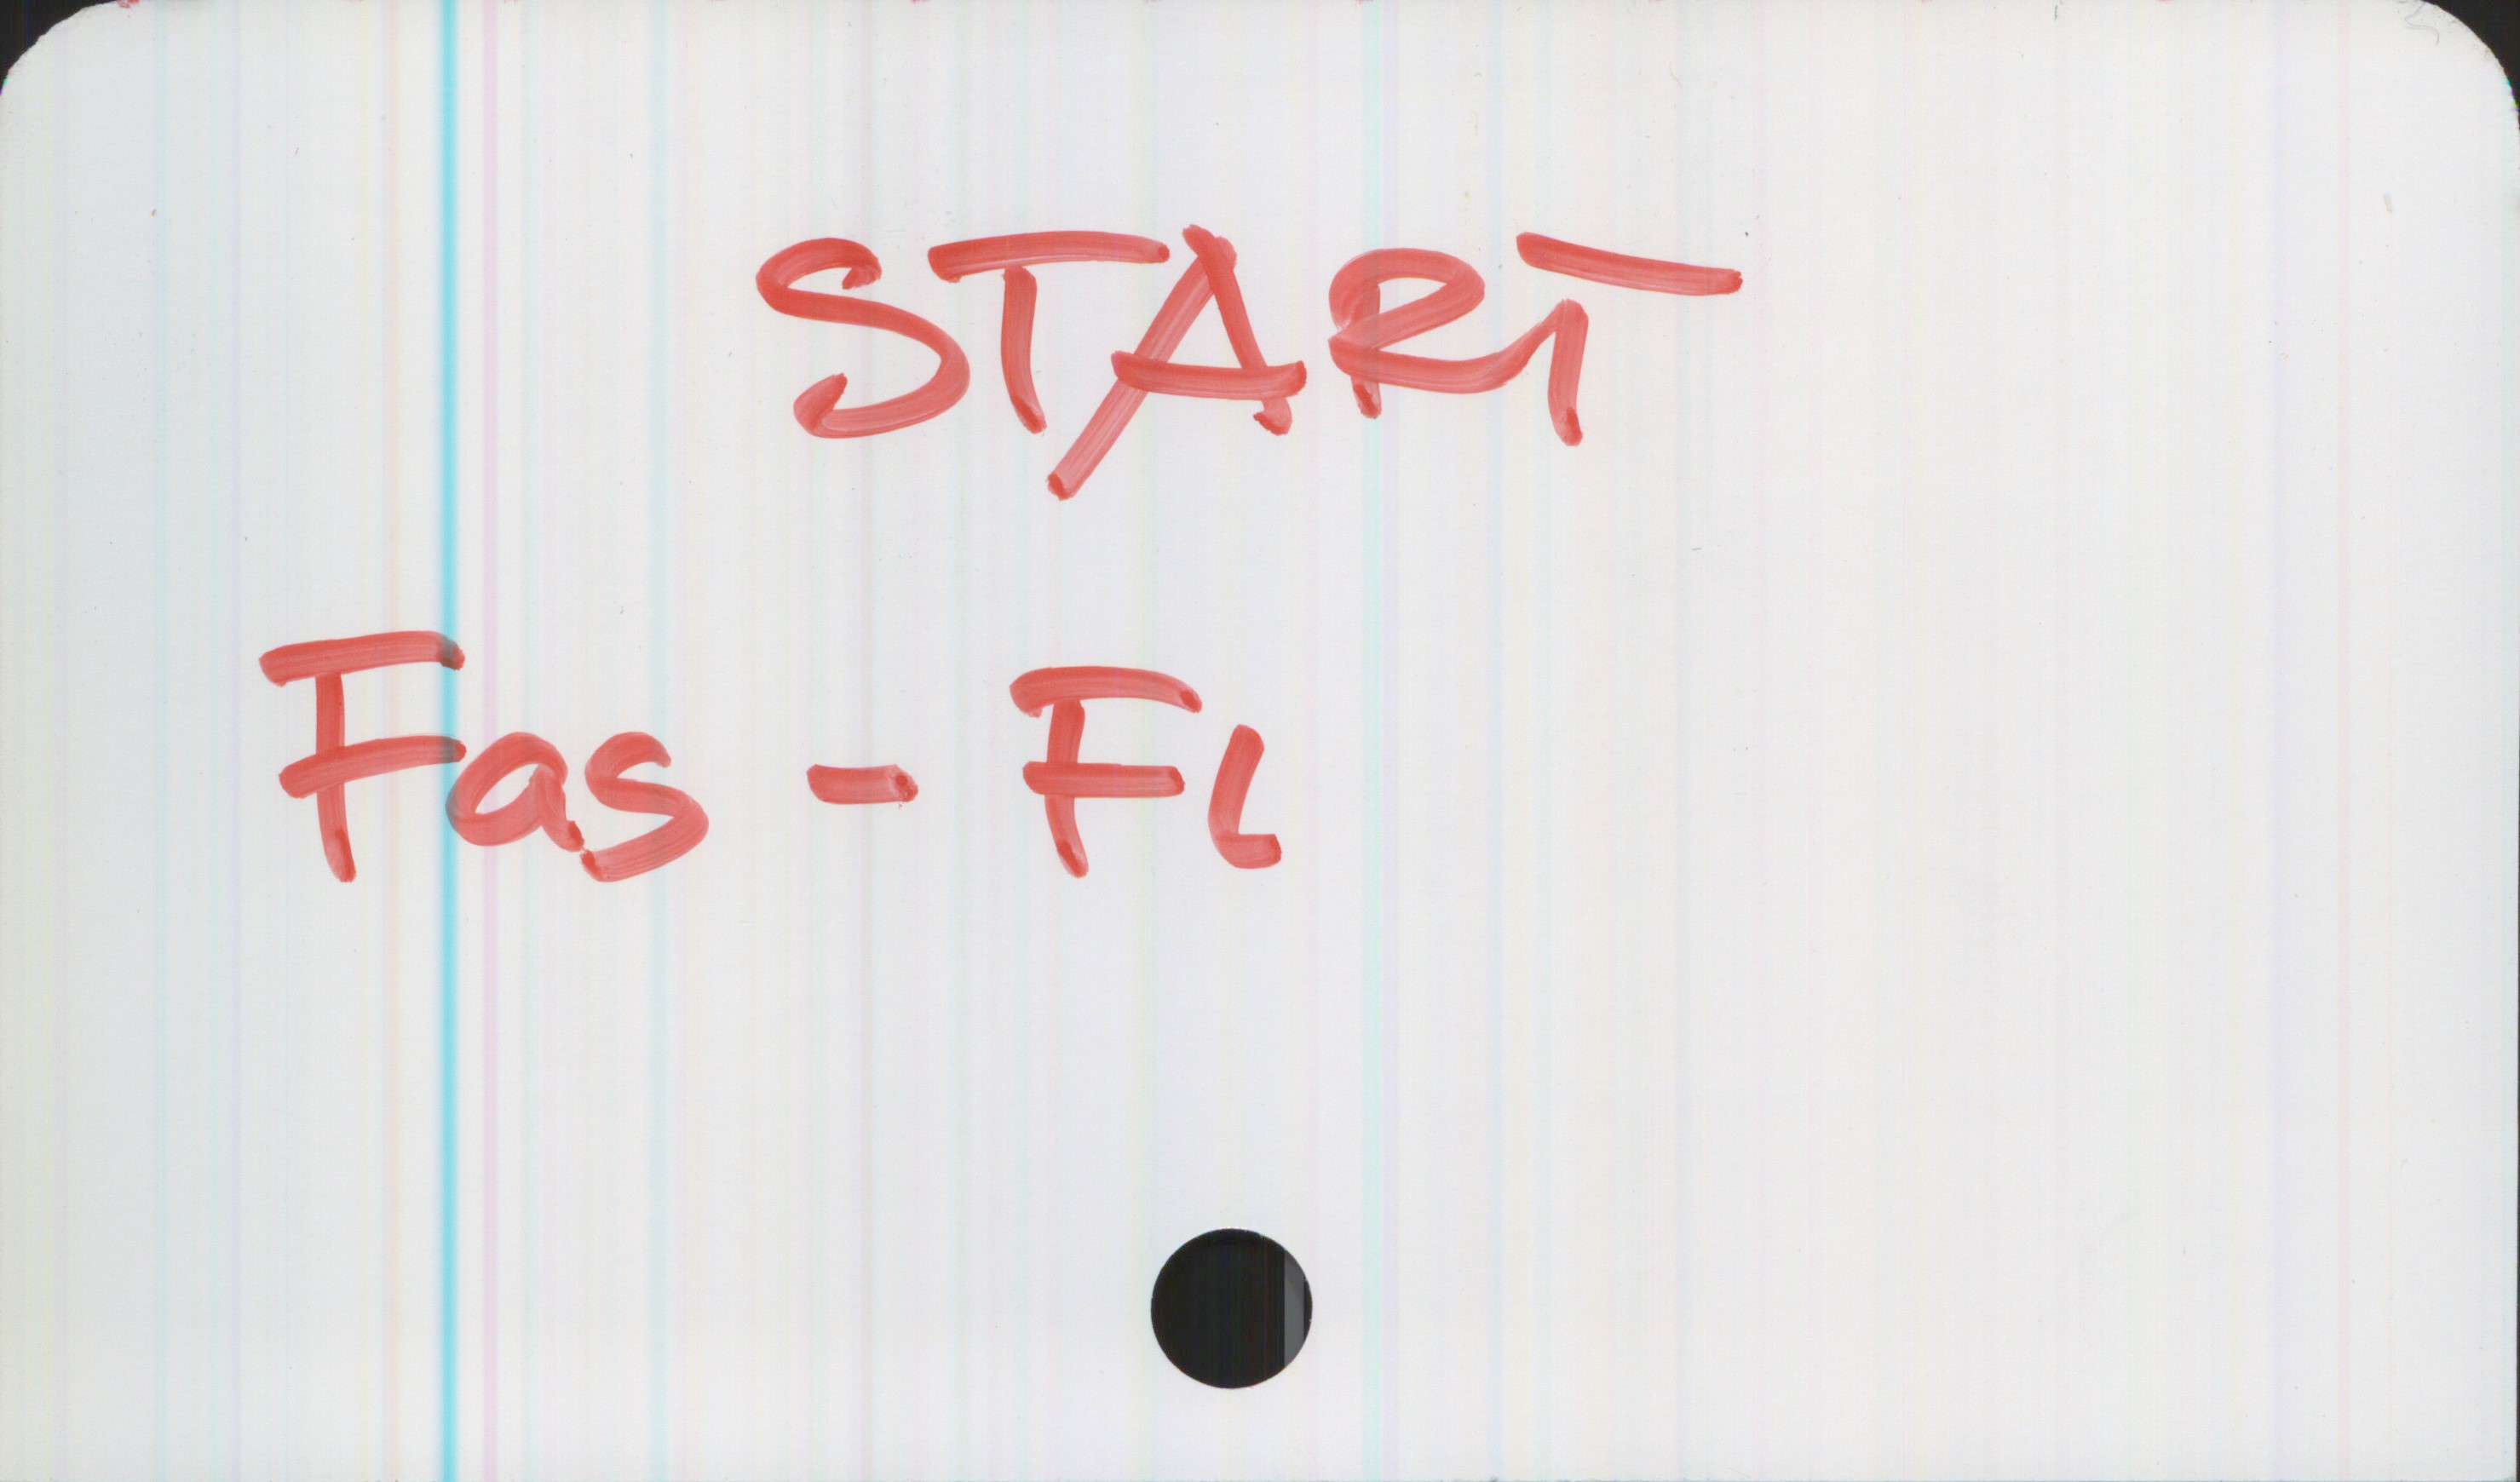 START Fas - Fc START 
Fas - Fc